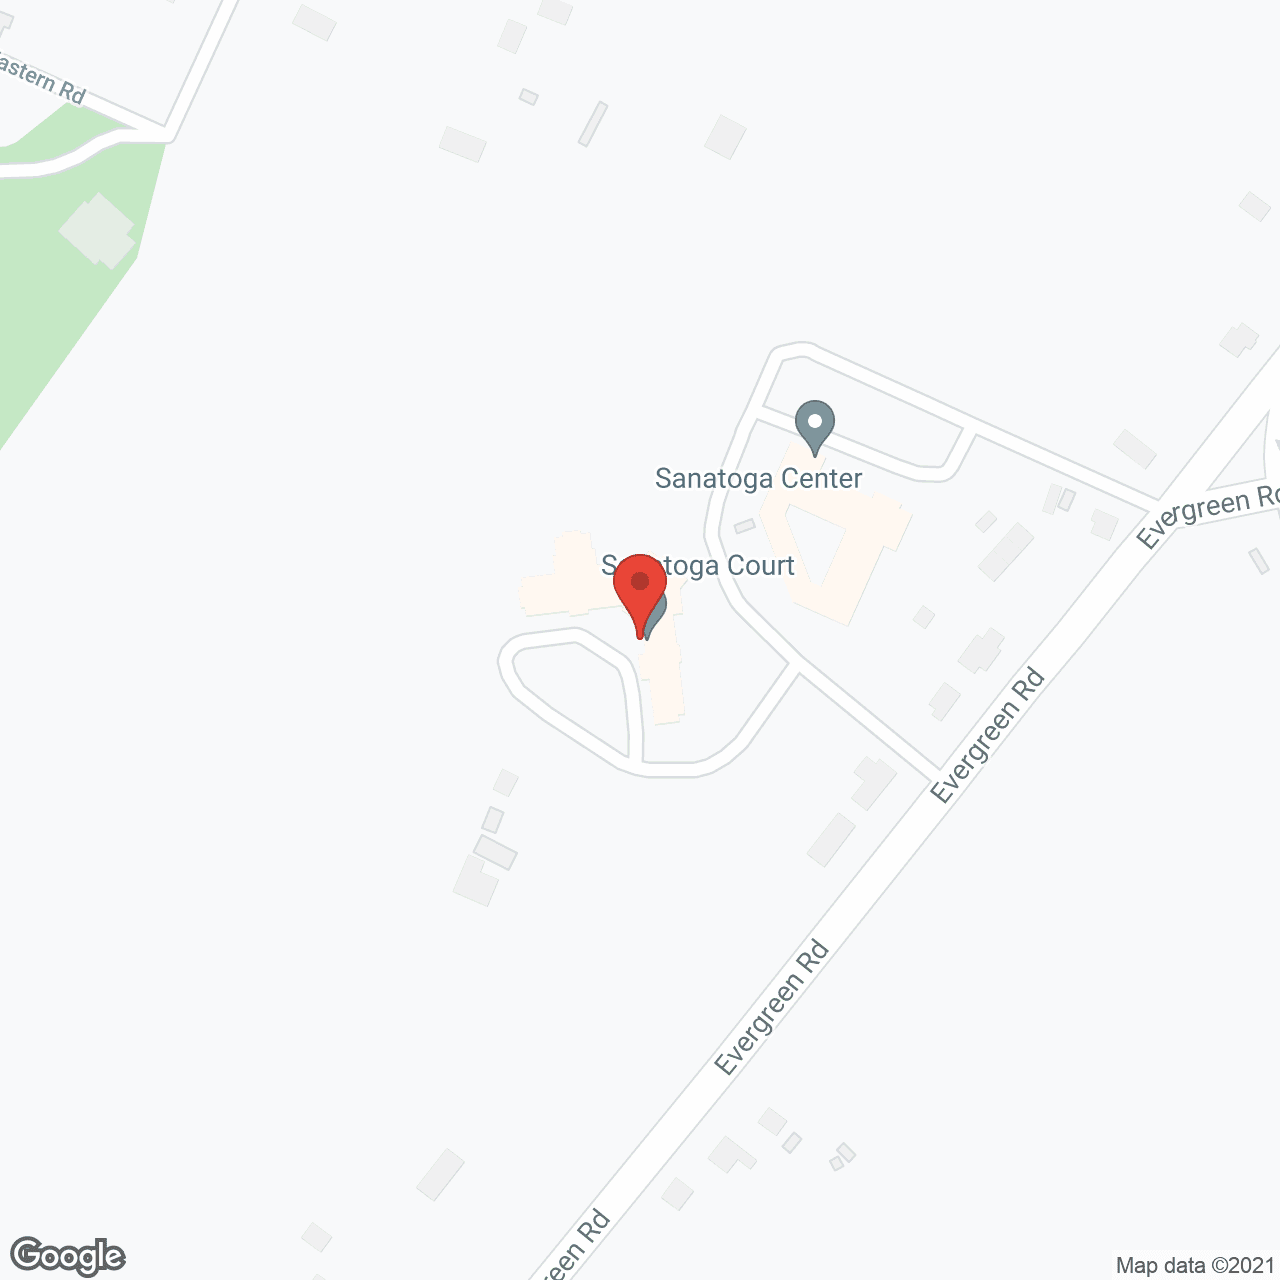 Sanatoga Court in google map